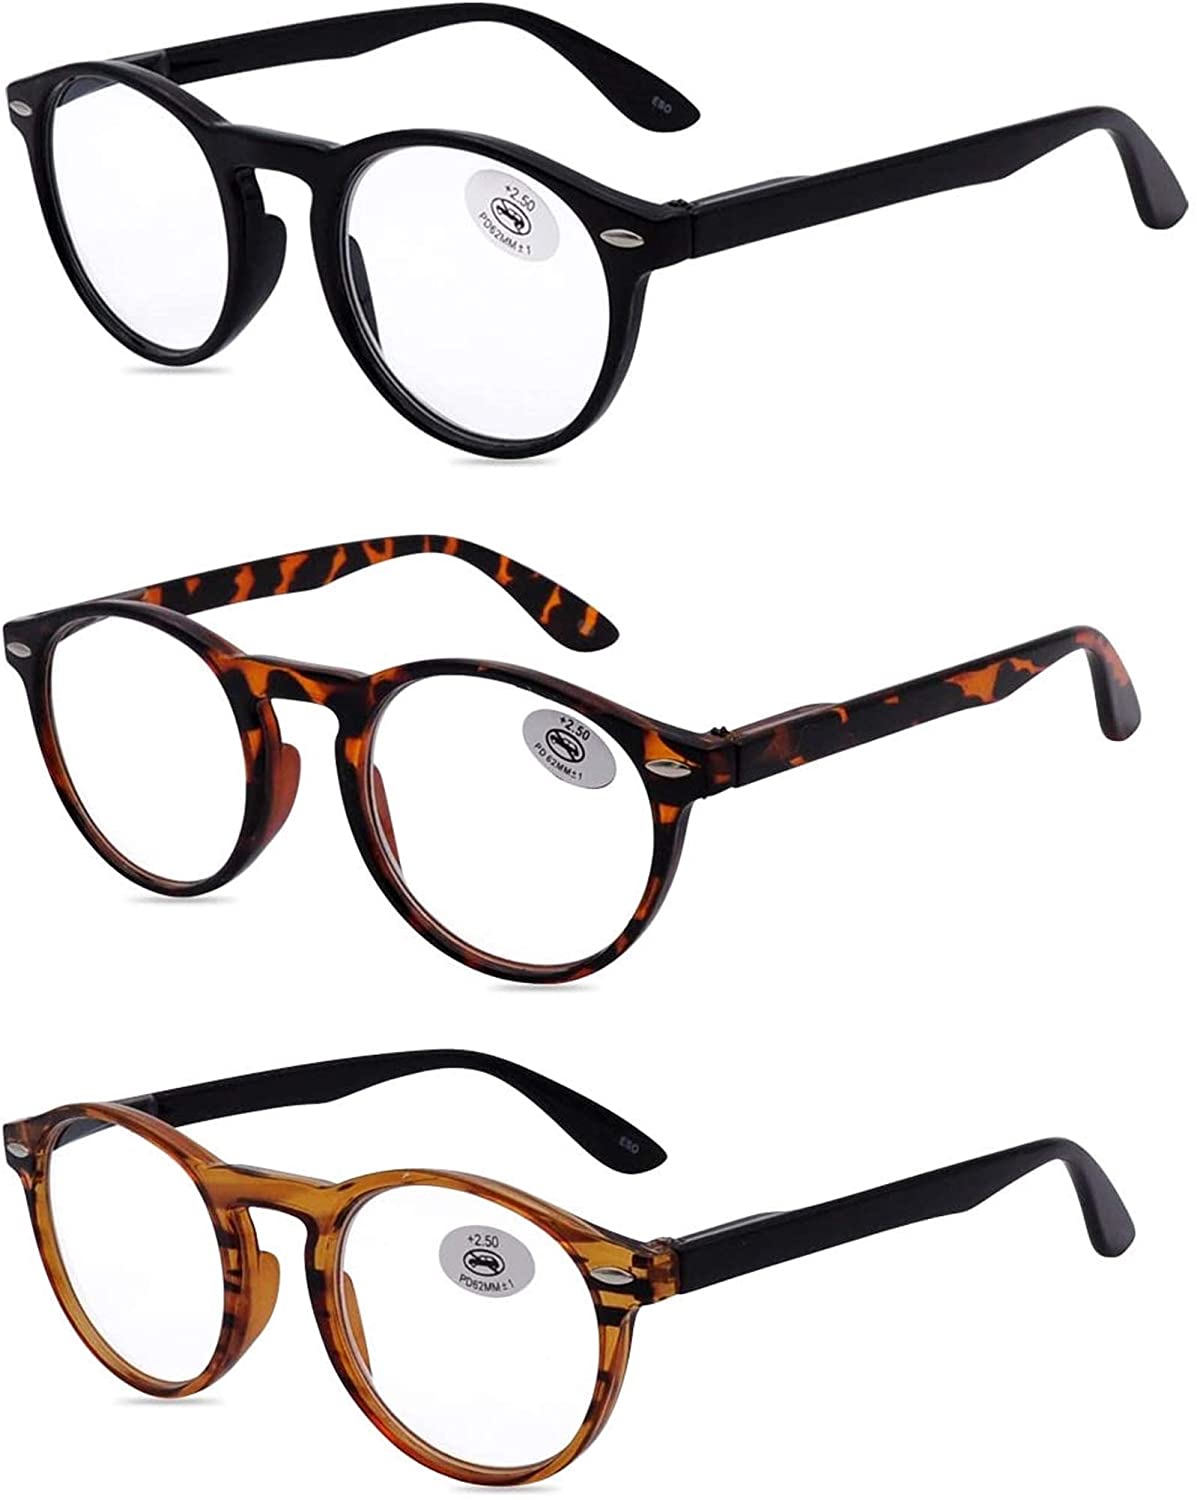 amillet retro glasses frames